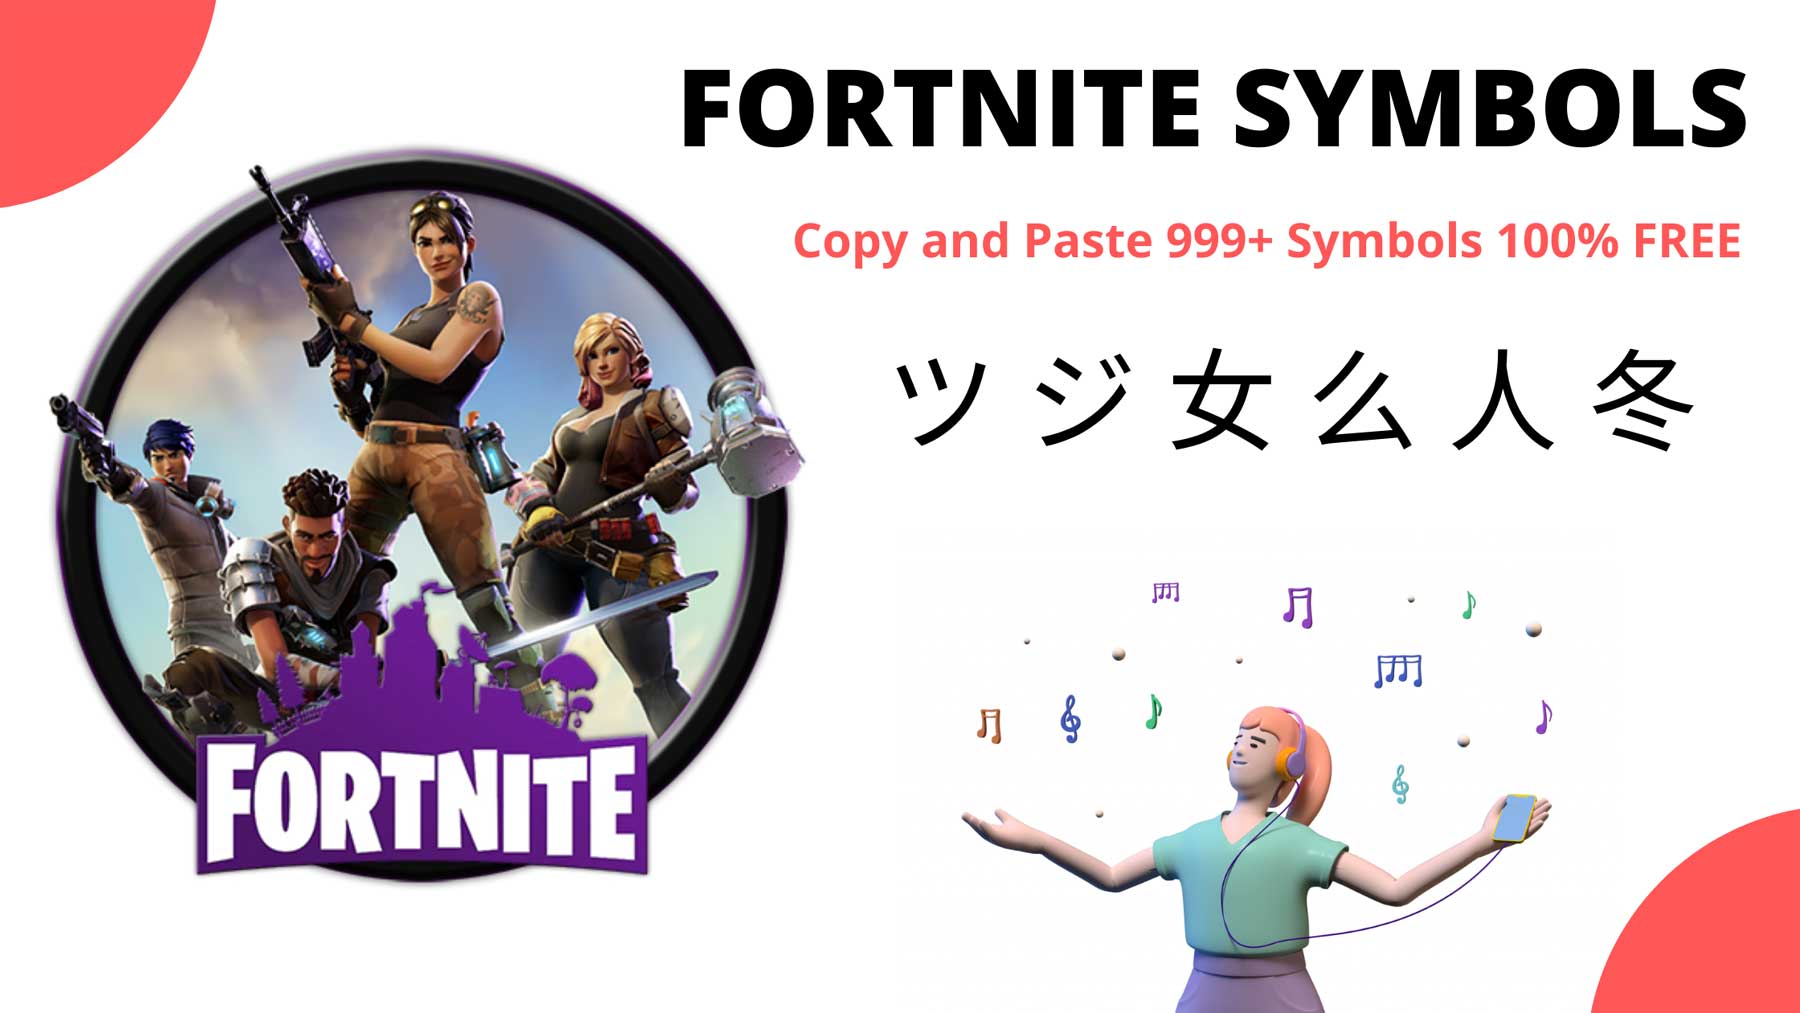 fortnite-symbols-999-gaming-symbols